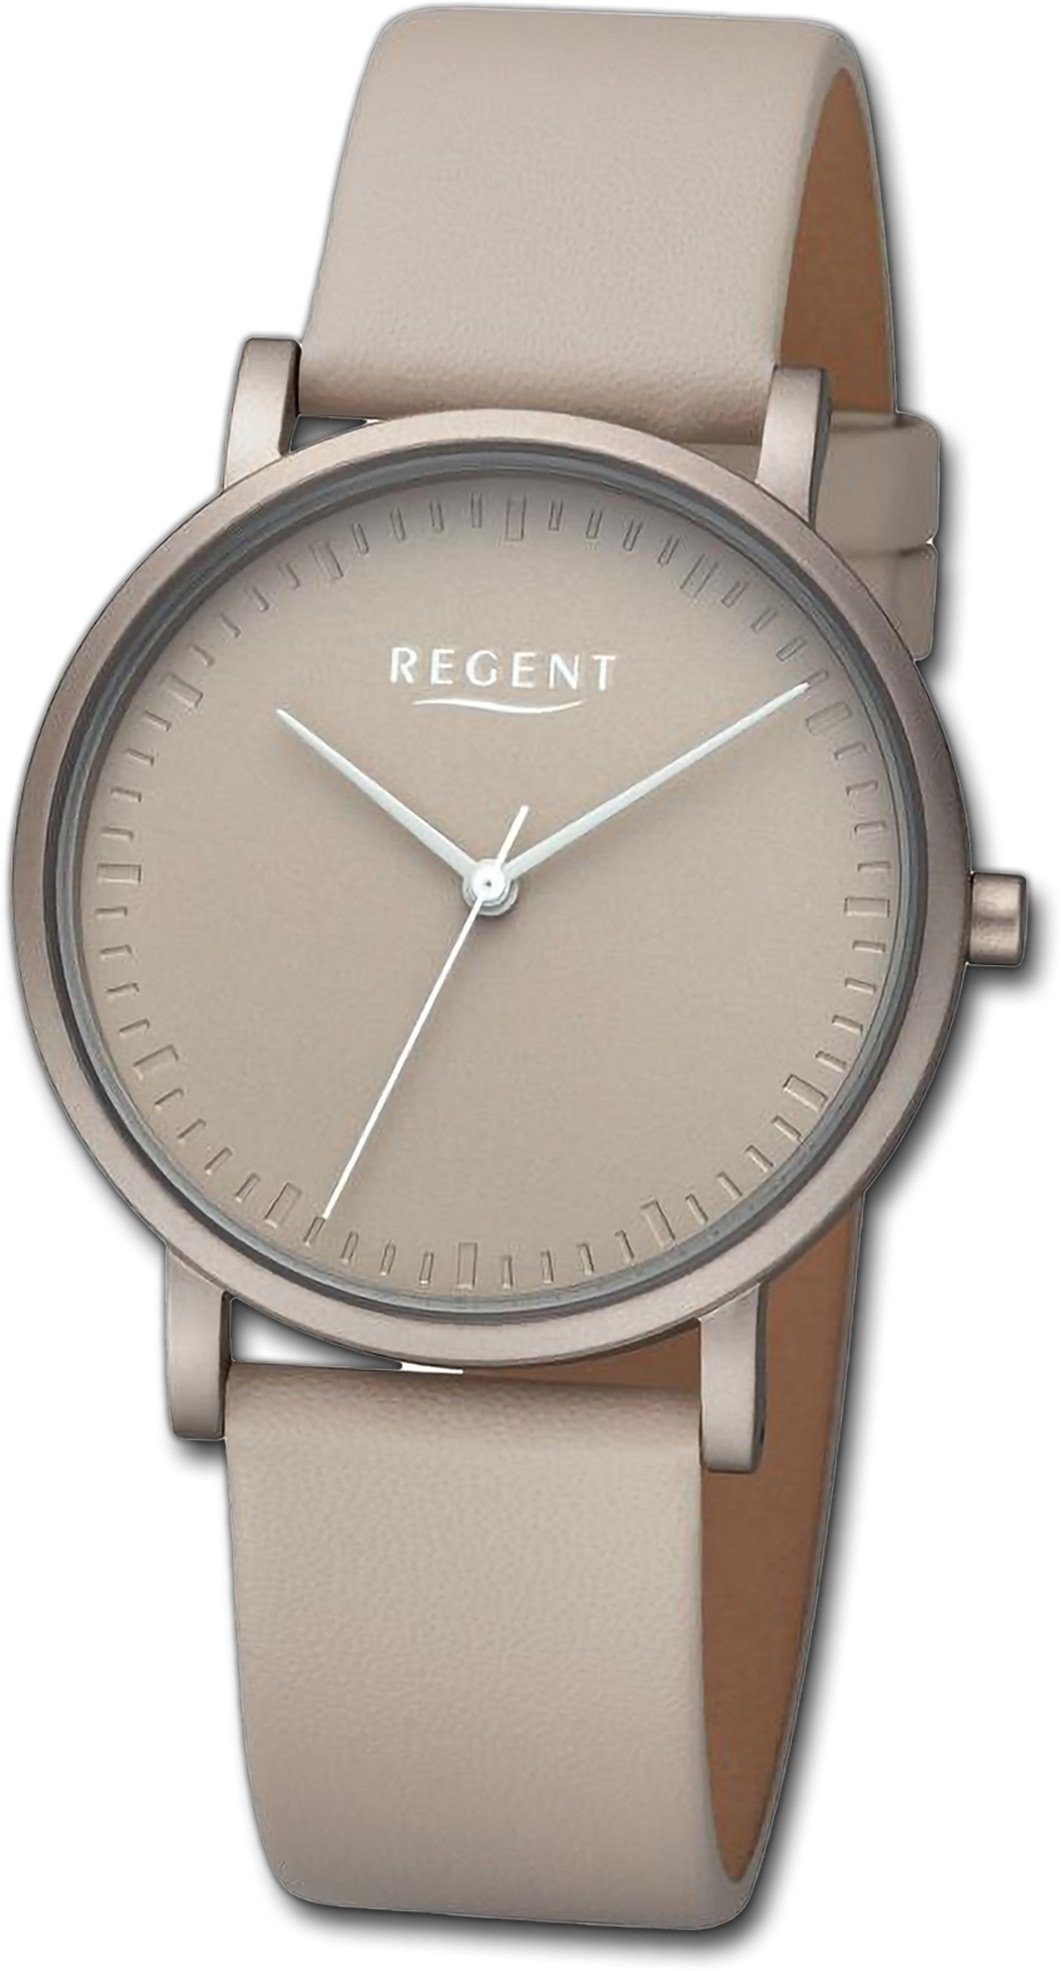 Regent Quarzuhr Regent Damen Armbanduhr Analog, Damenuhr Lederarmband taupe, rundes Gehäuse, extra groß (ca. 36mm)